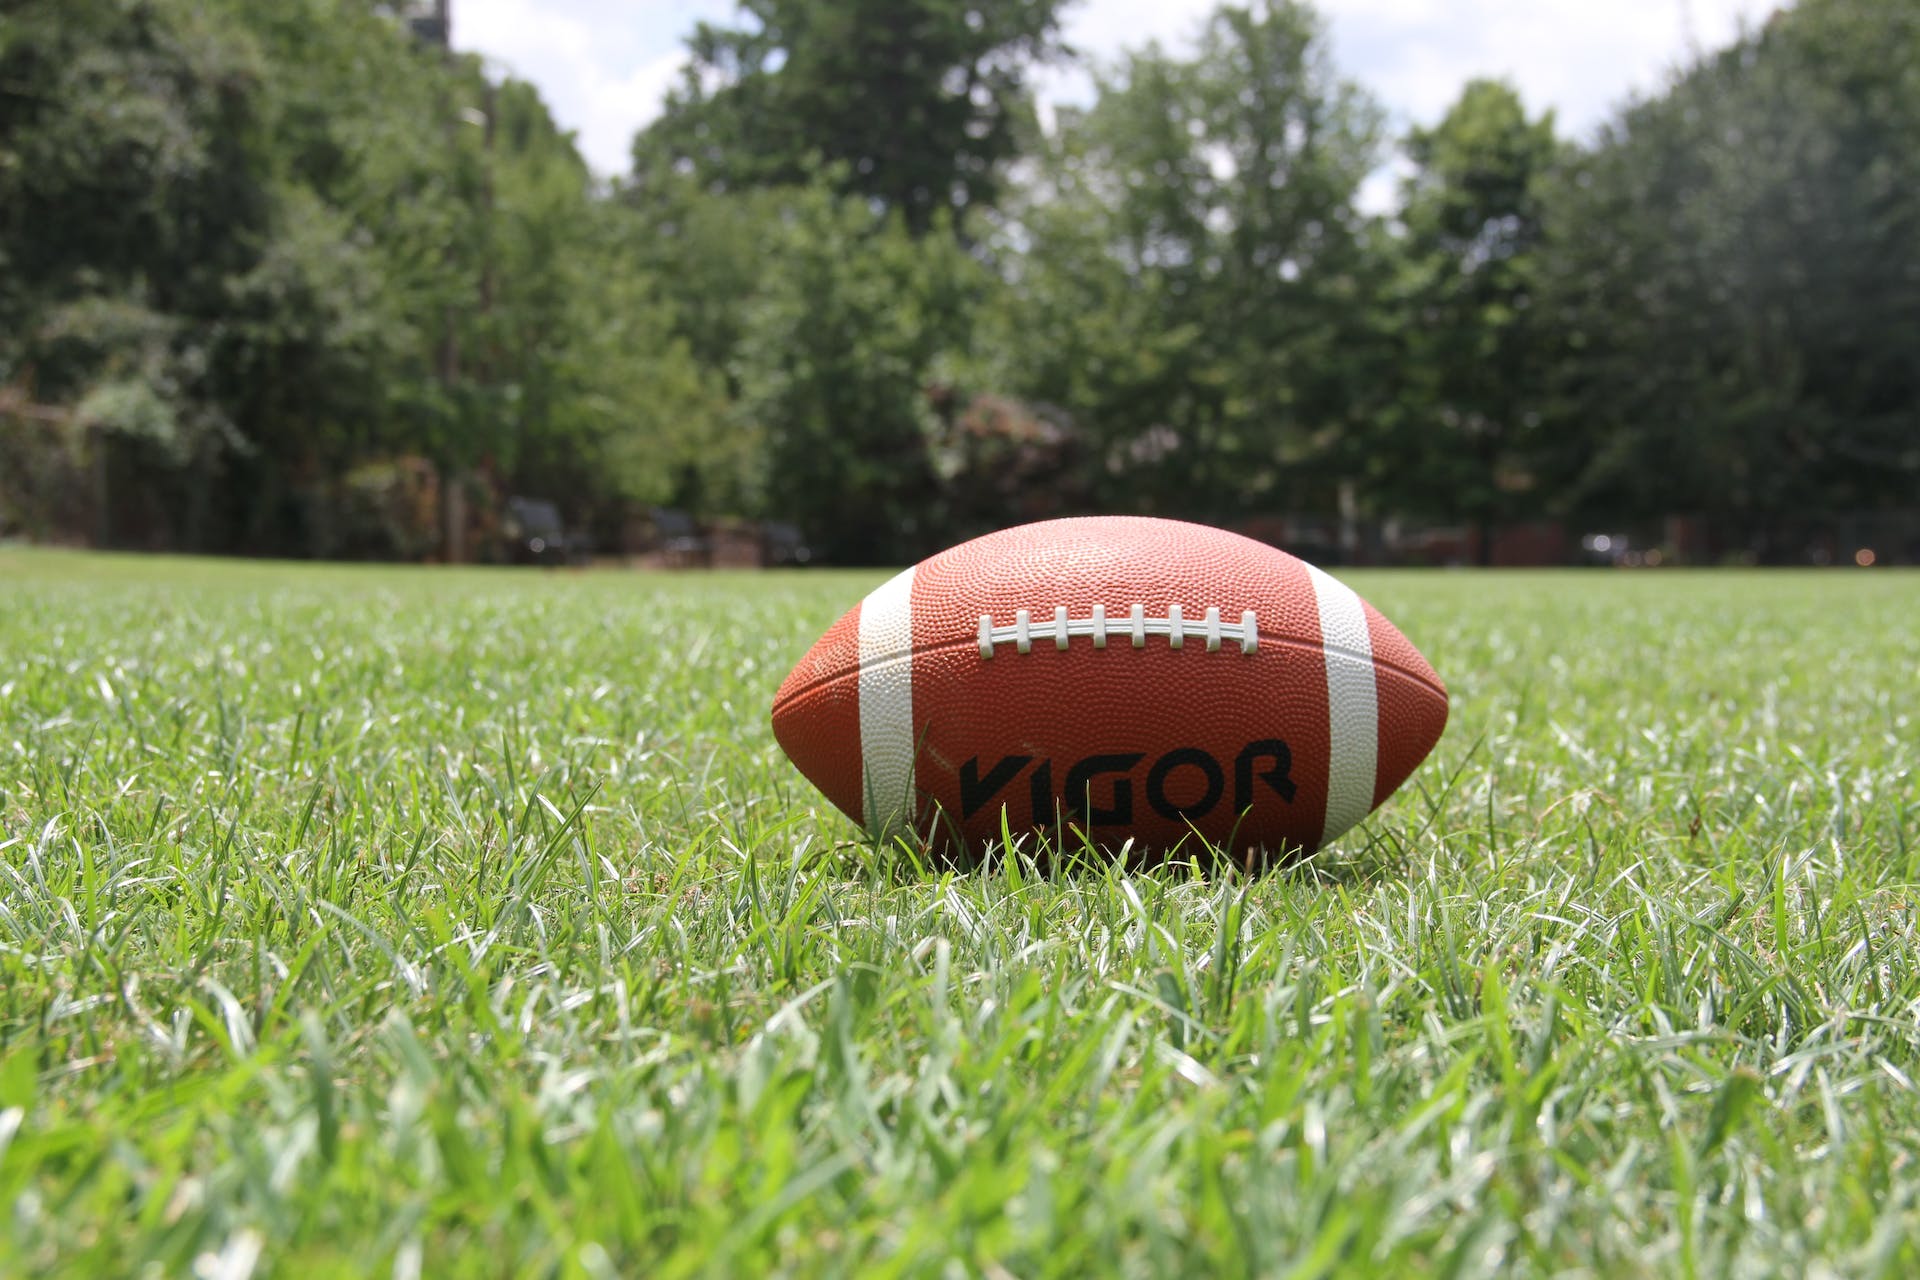 Football on grass | Source: Pexels